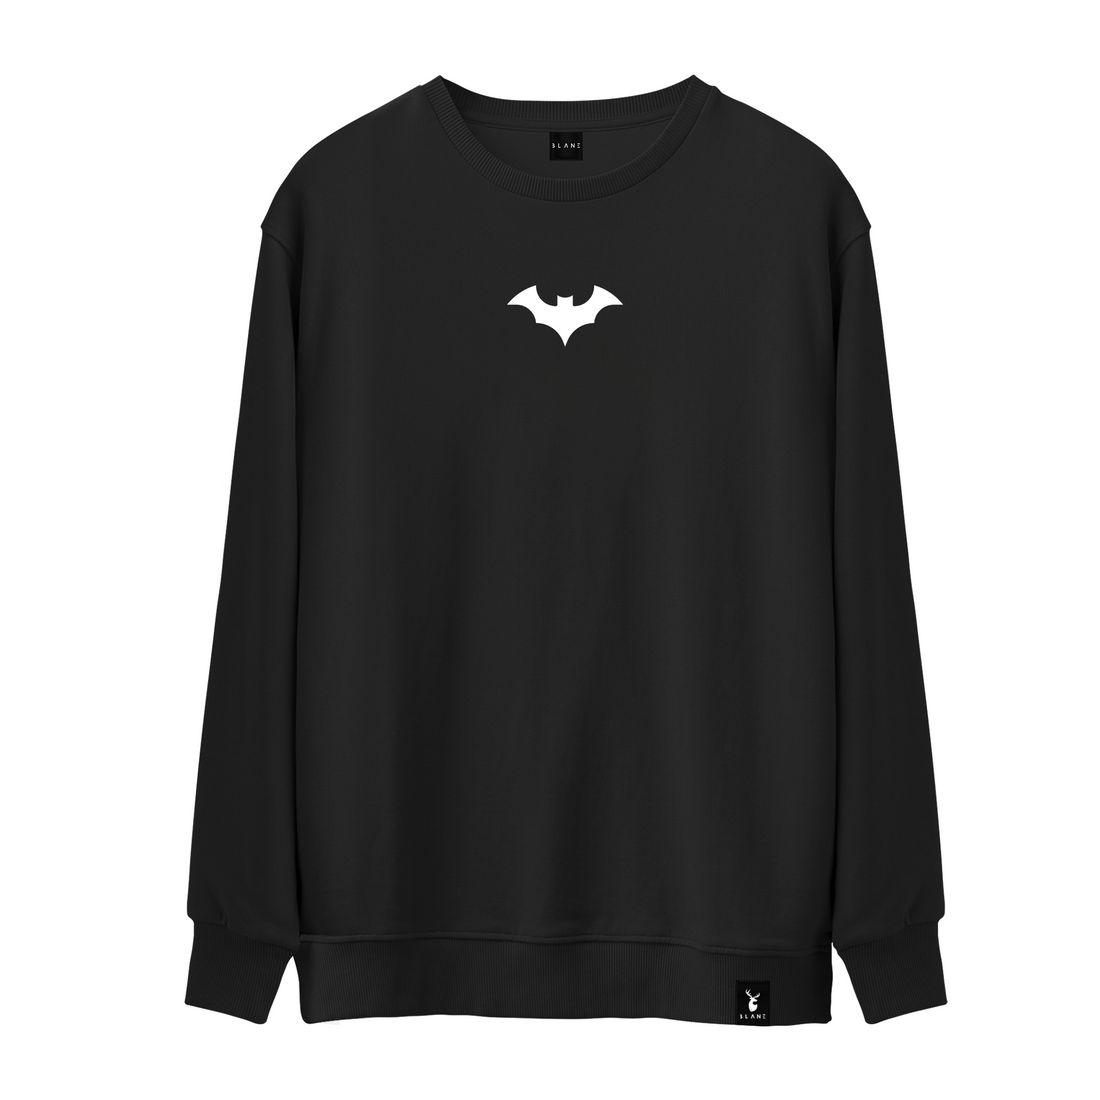 Bat - Sweatshirt